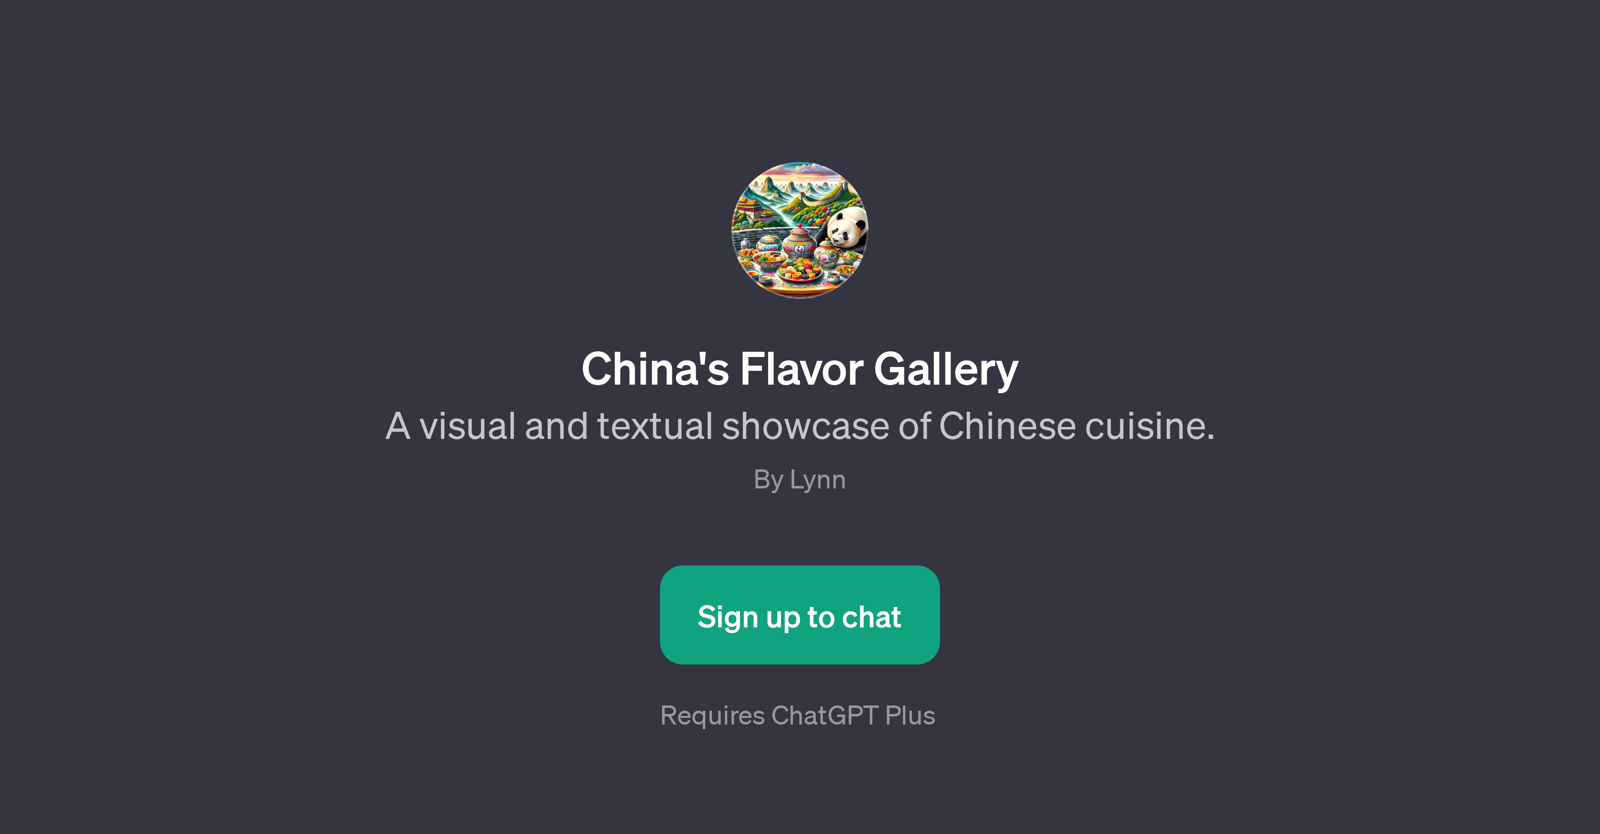 China's Flavor Gallery website